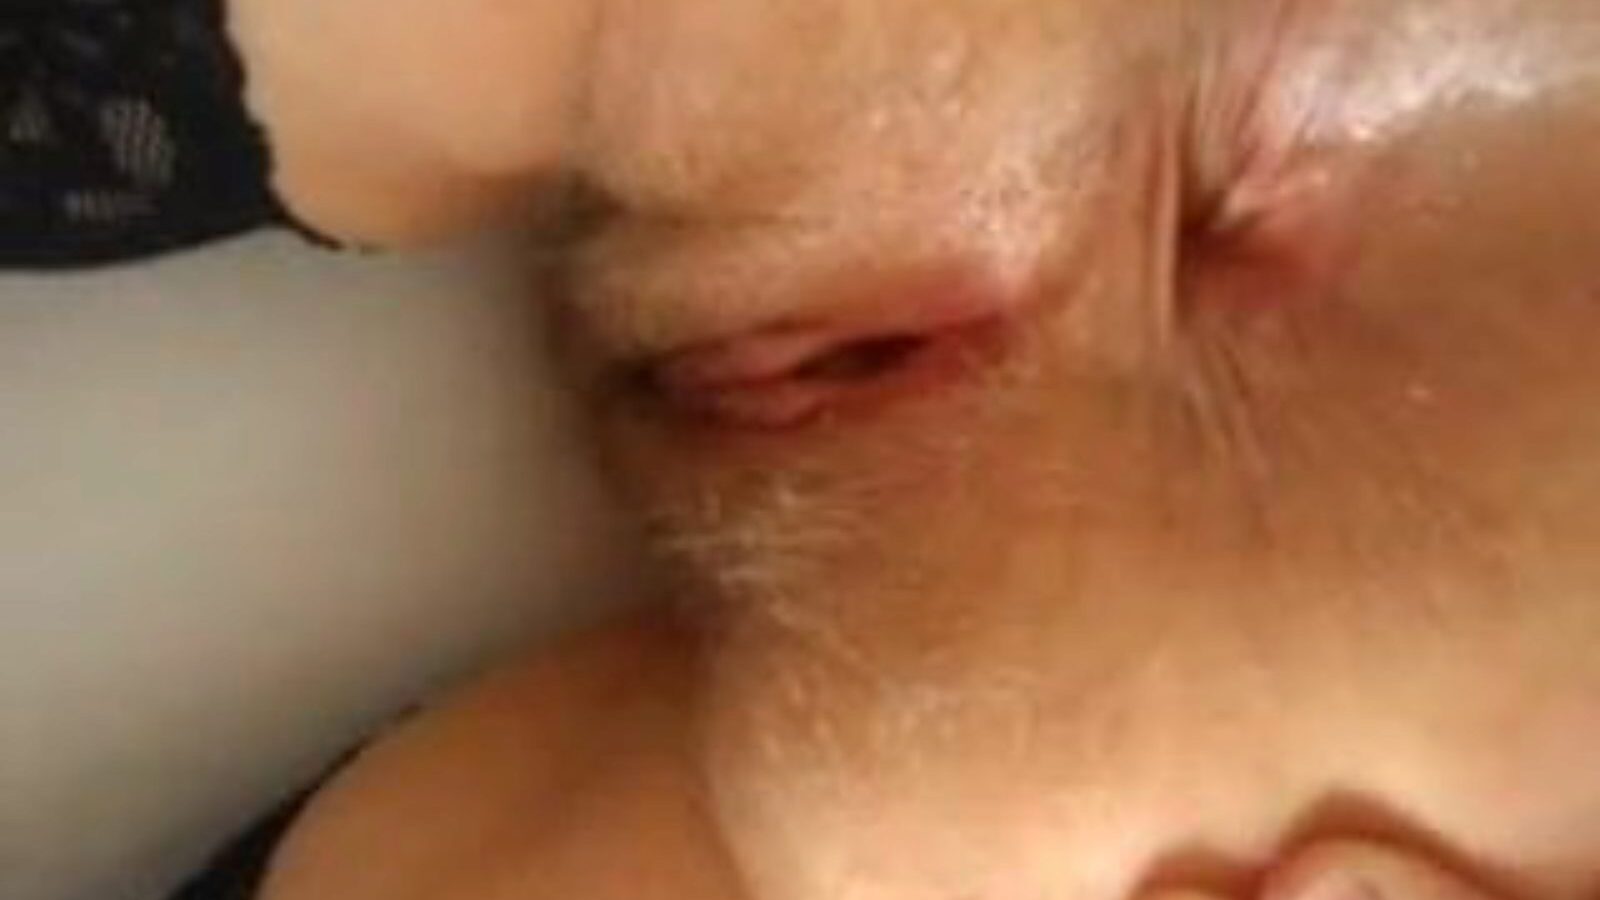 spread ass: spread open & mobile ass porn video - xhamster watch spread ass tube bang-out movie scene in free on xhamster with the elképesztő mennyiségű terjedő nyitott mobil segg és nyitott seggfej pornó epizódsorozatok